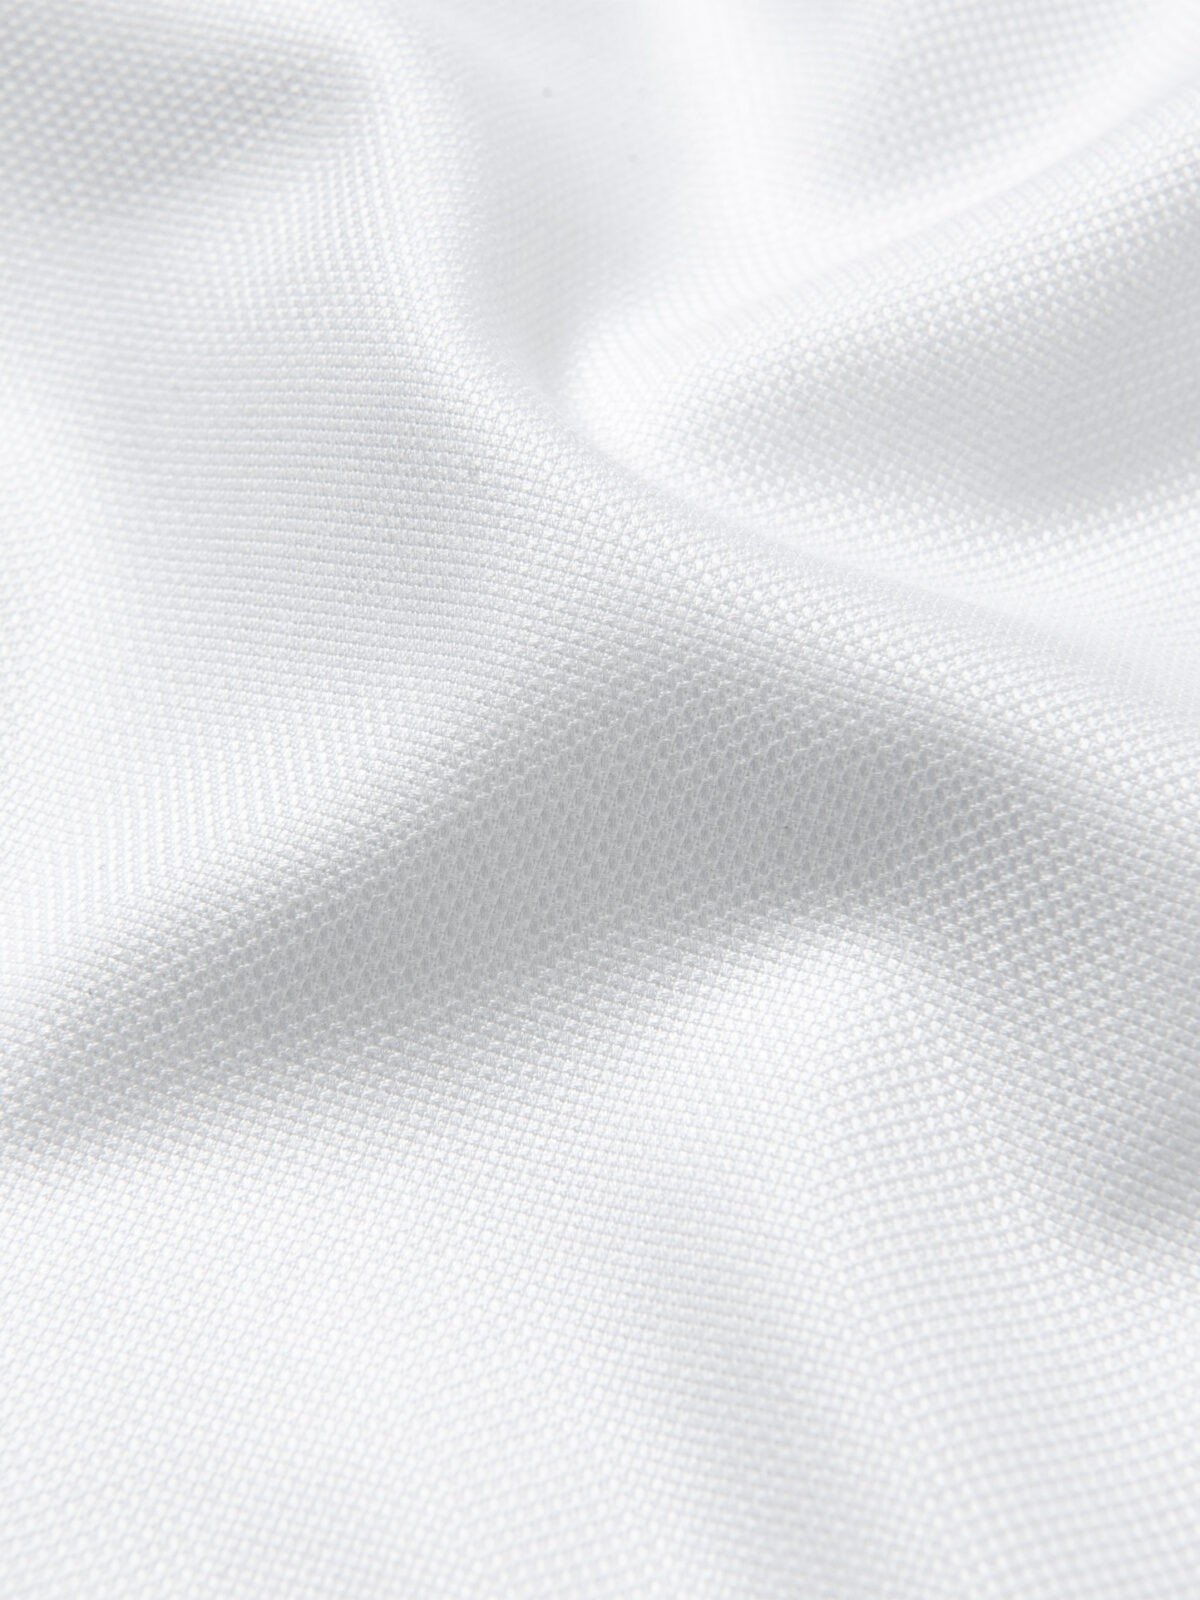 Non-Iron Supima White Royal Oxford Shirts by Proper Cloth